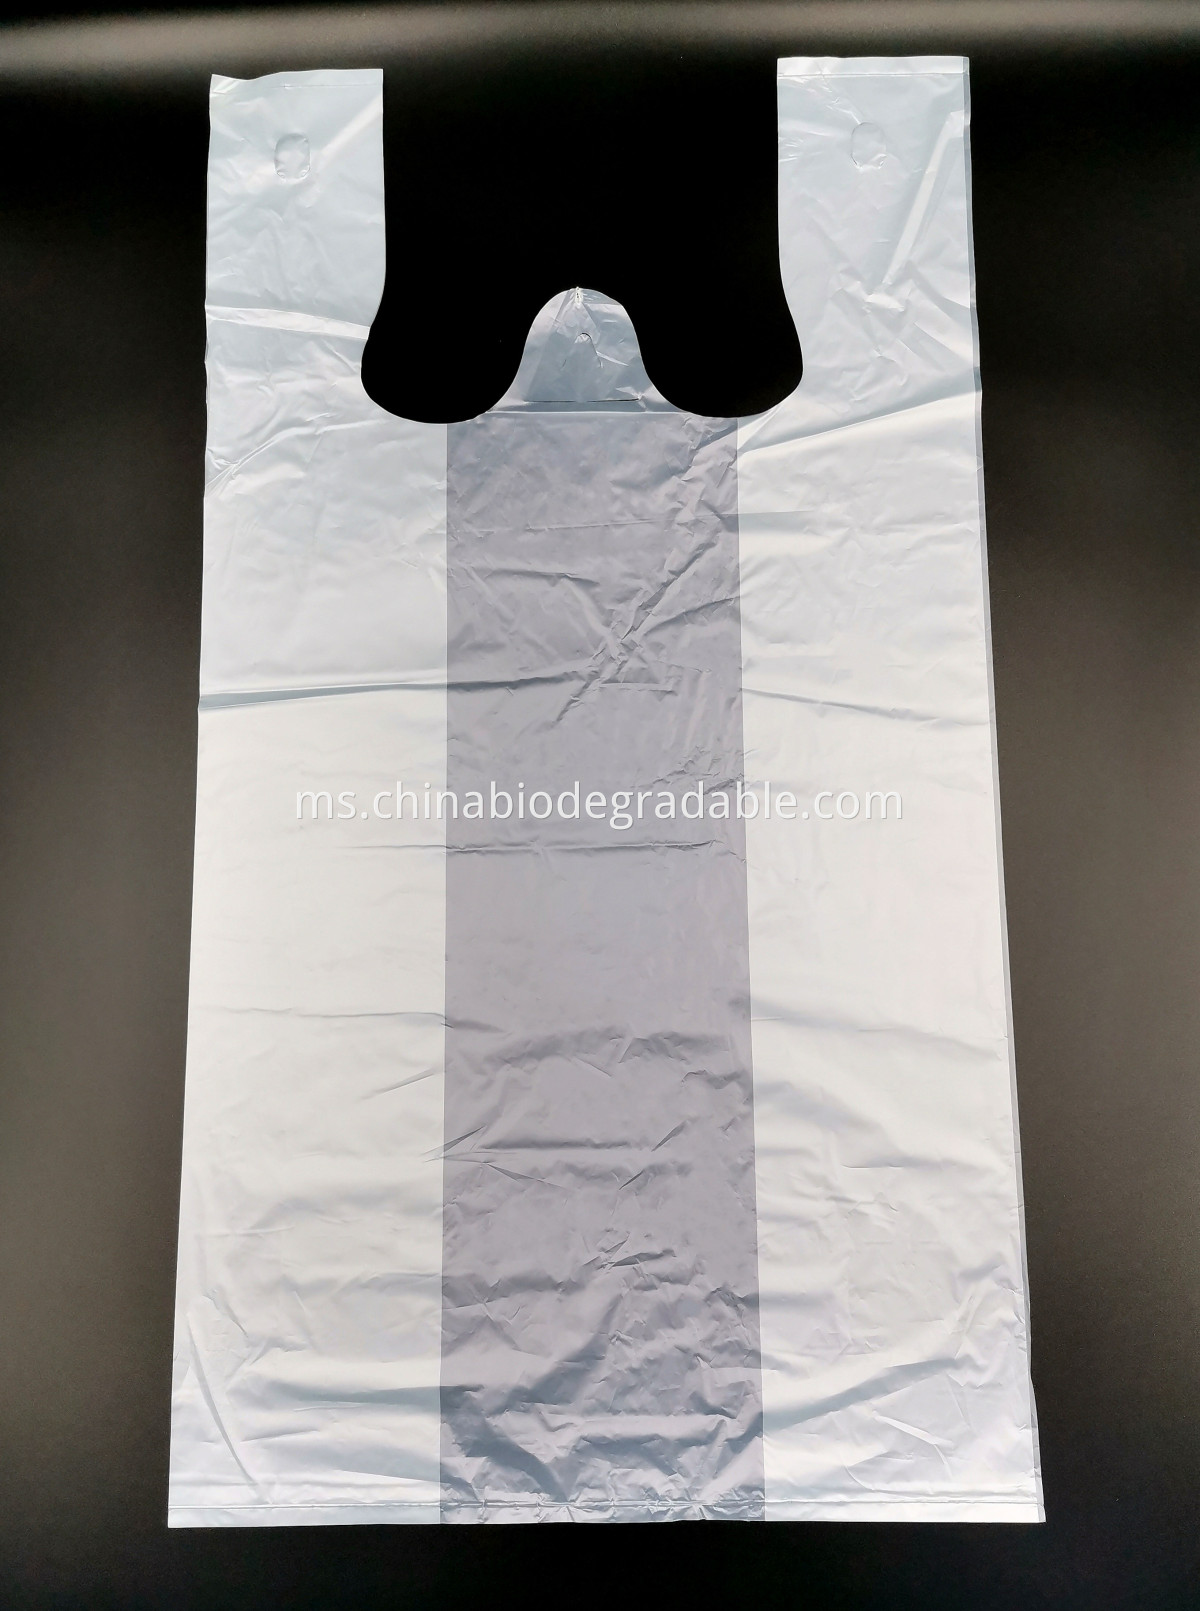 Biodegradable Plastic Supermarket Bags